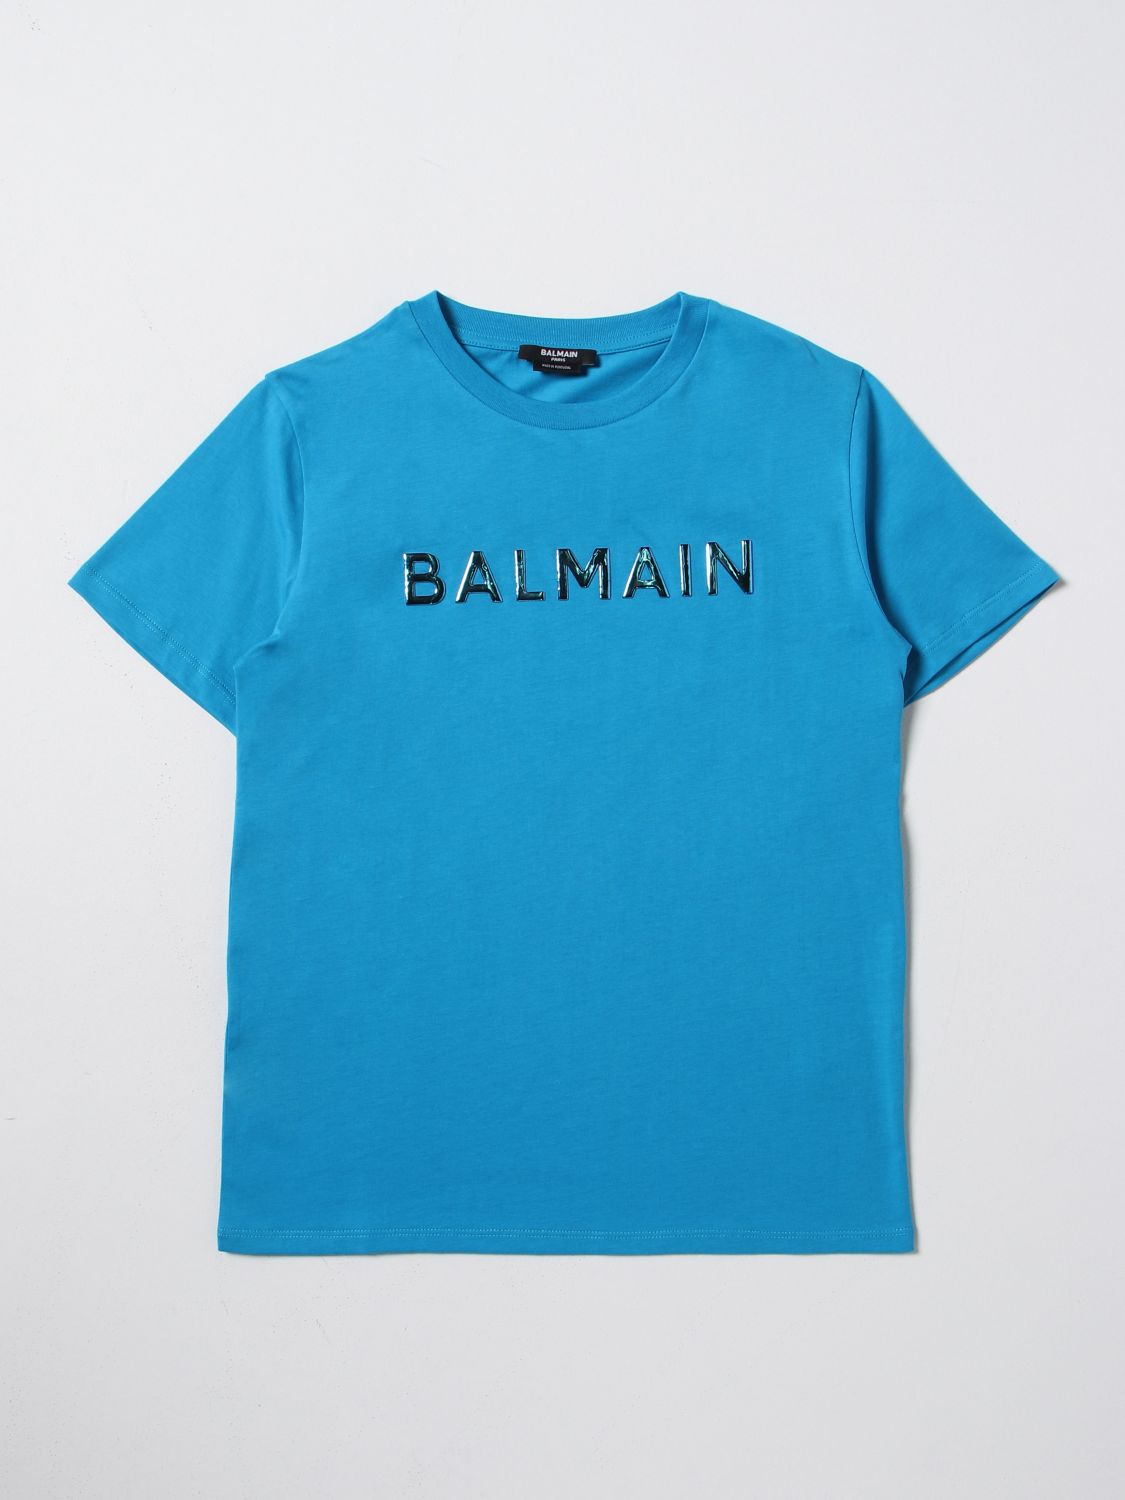 Zeebrasem dwaas Ik denk dat ik ziek ben BALMAIN KIDS: t-shirt for boys - Gnawed Blue | Balmain Kids t-shirt  BS8R11Z0082 online on GIGLIO.COM